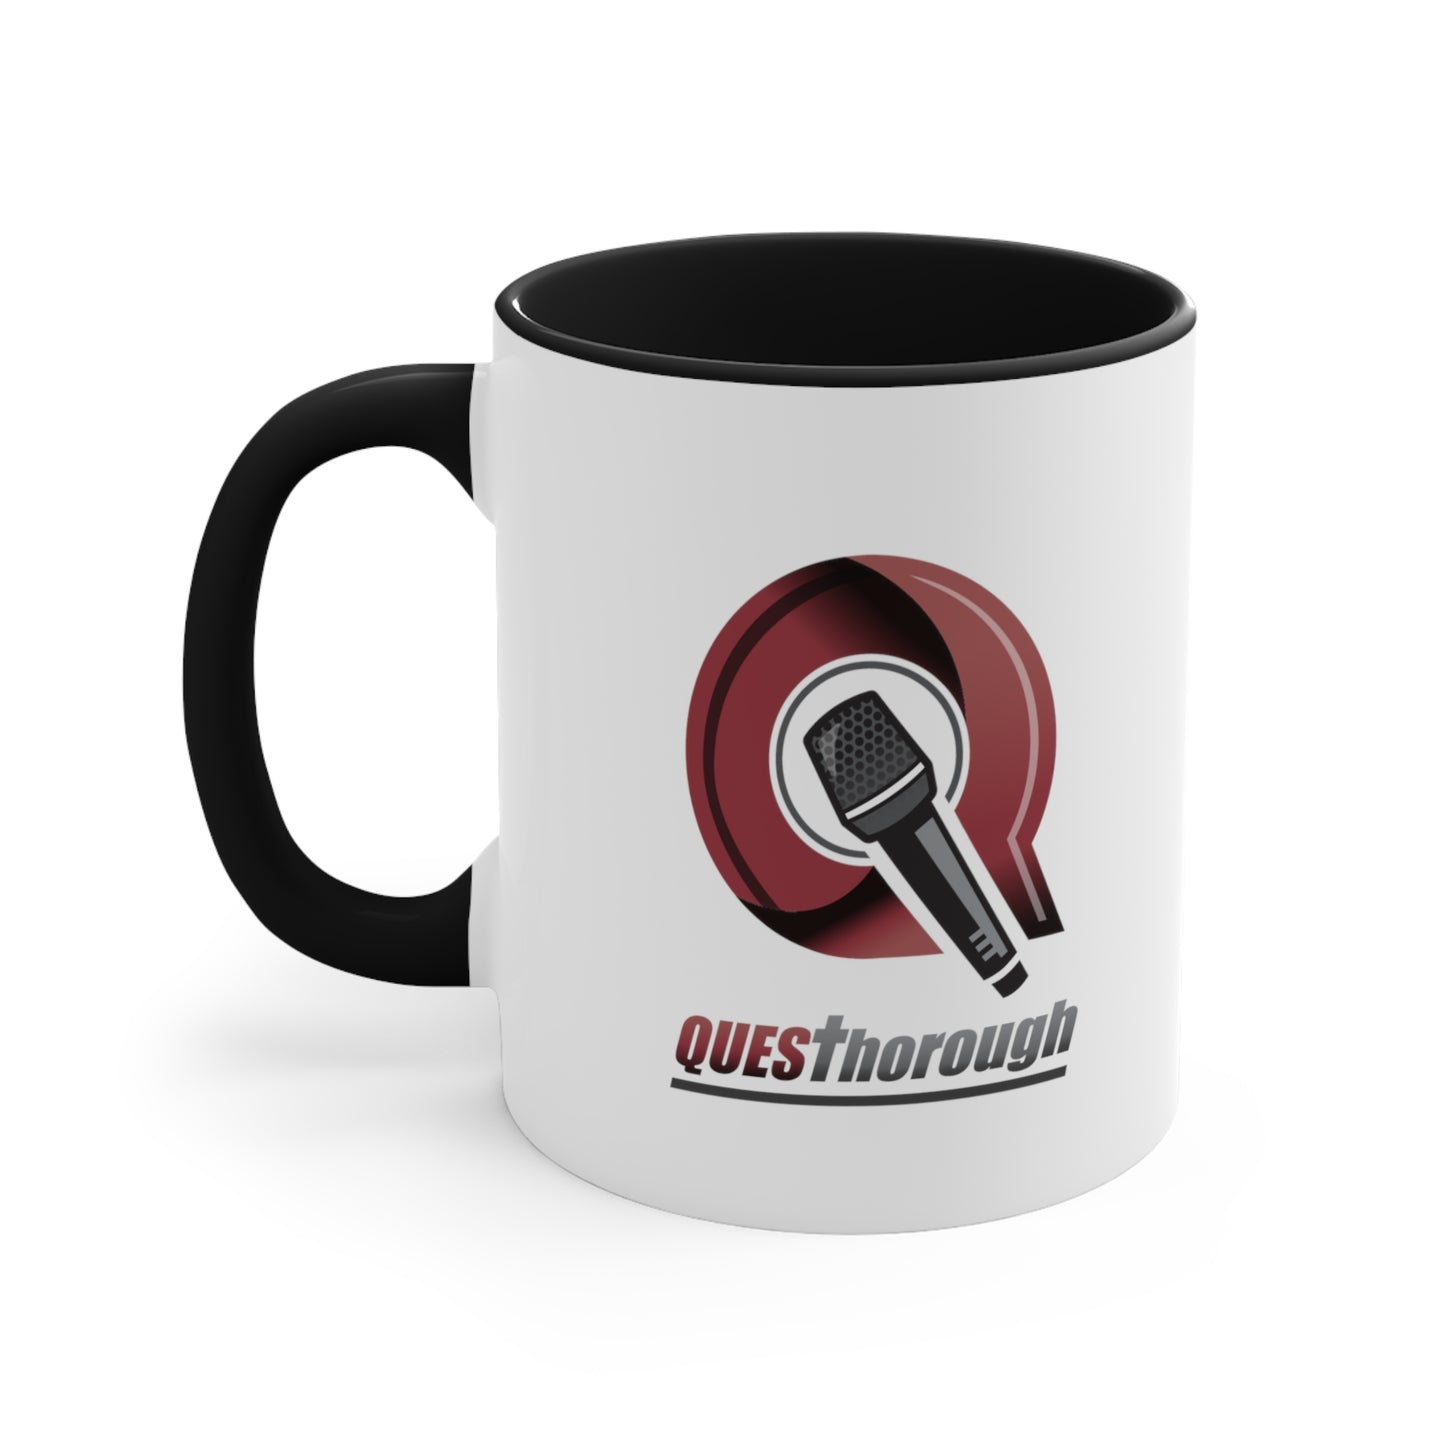 QuesThorough Signature Red - Accent Coffee Mug, 11oz